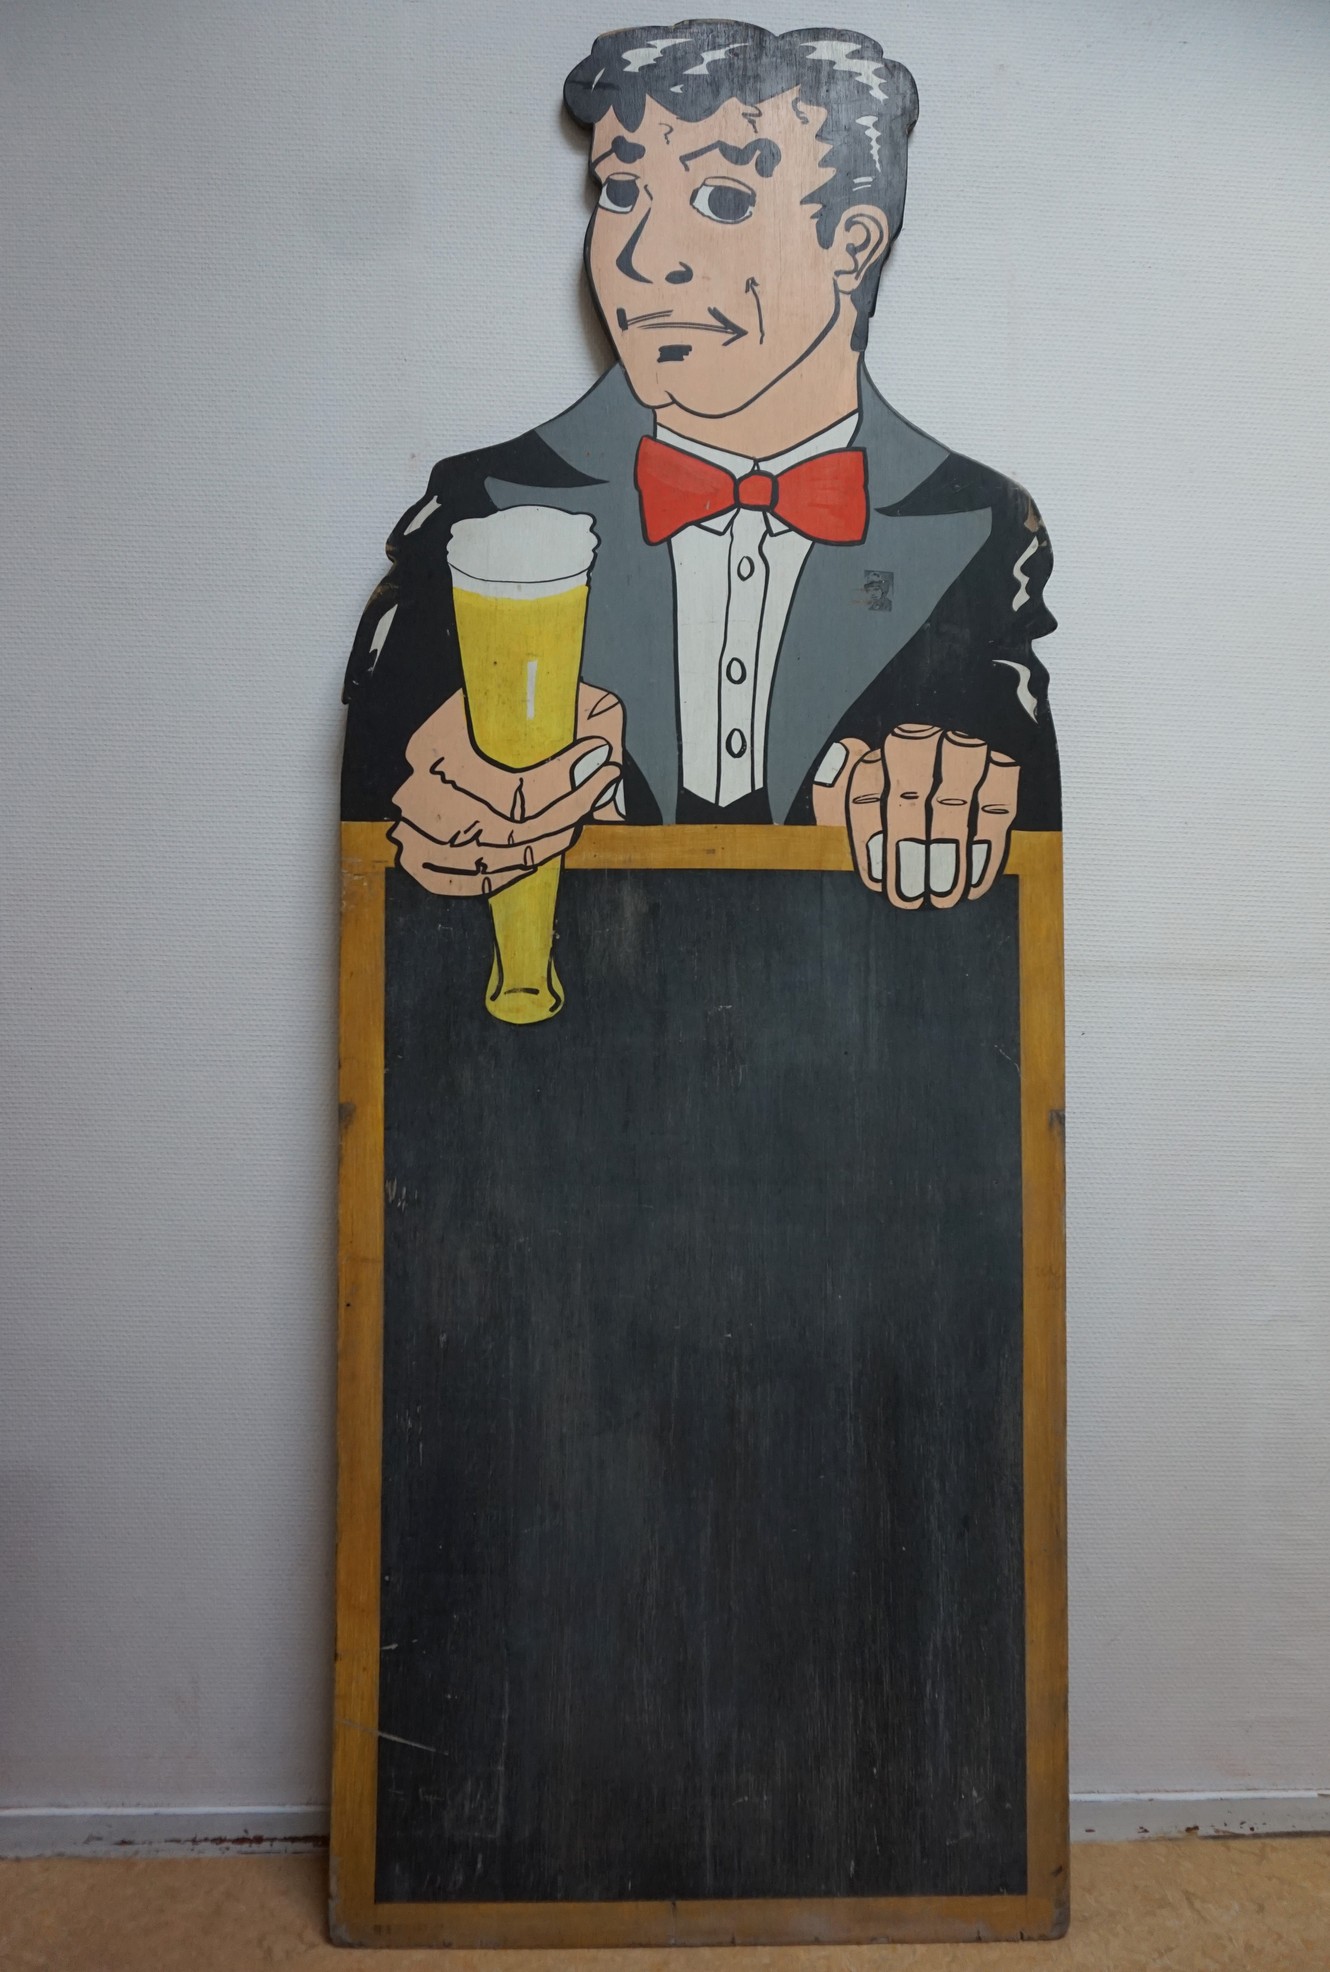 Vintage-bistro-cafe-reclamebord-krijtstoepbord-menubord- bier-advertising-beer-chalkboard for pub-cafe-bar-bistro